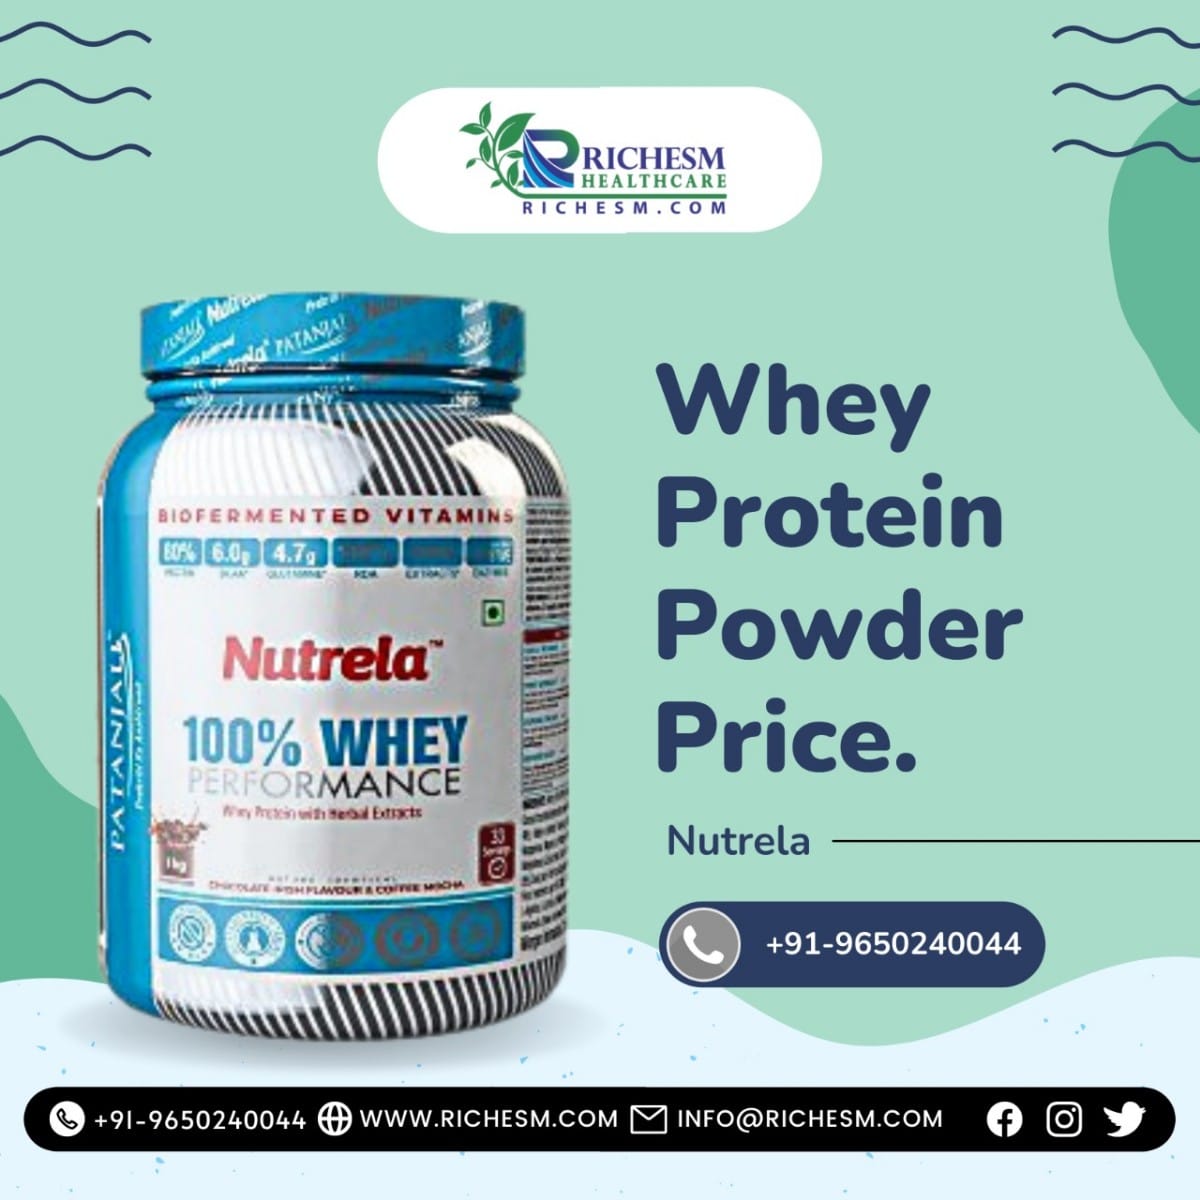 Whey Protein Powder Price